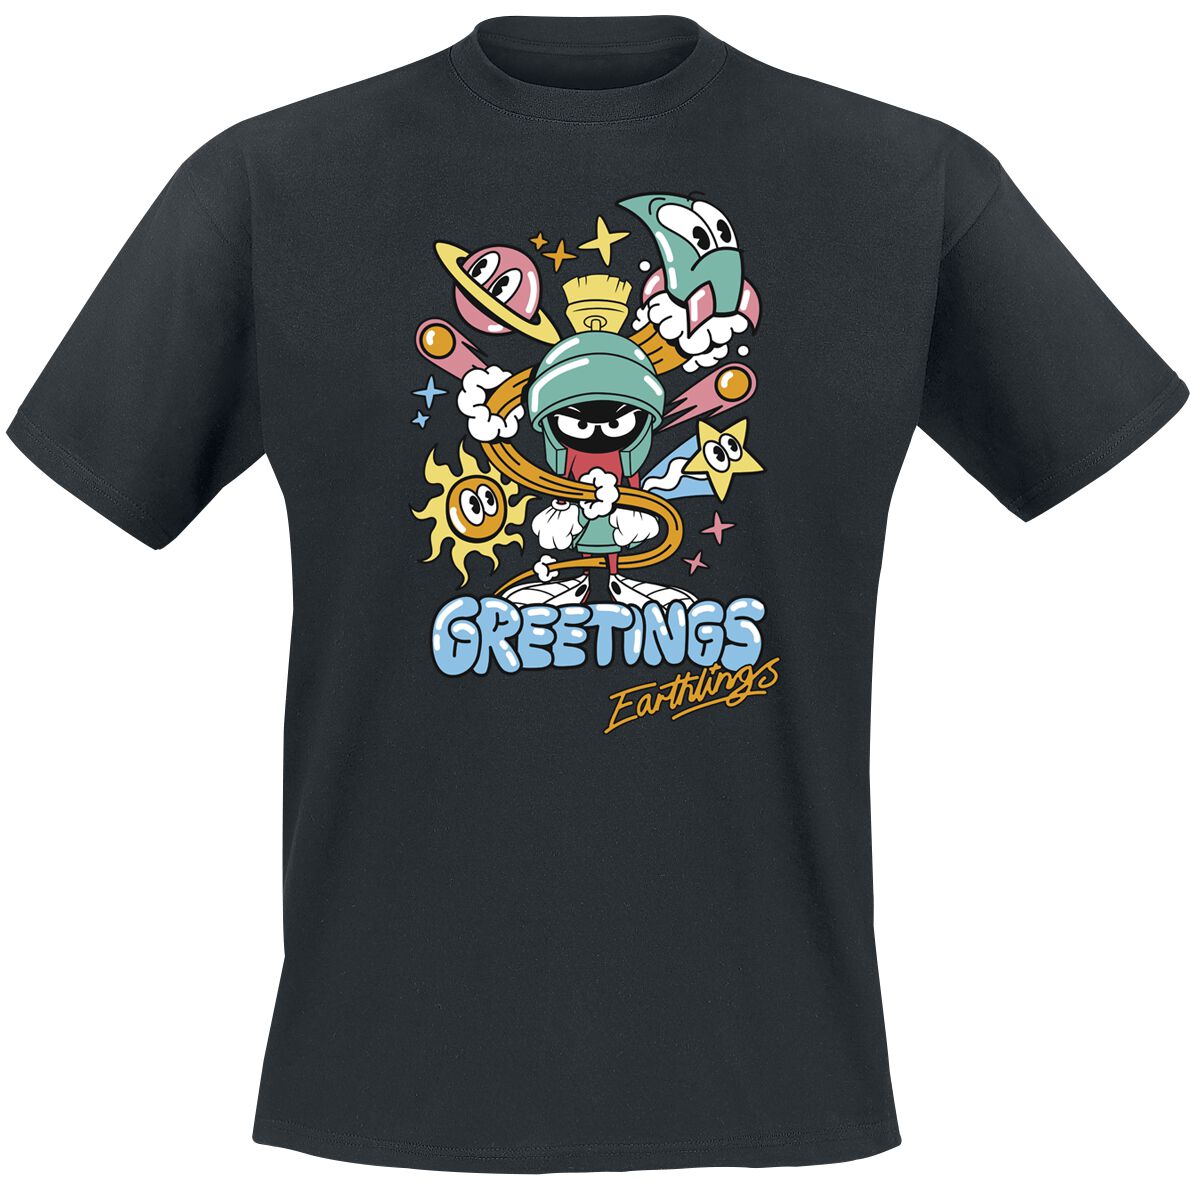 Looney Tunes Marvin Greetings T-Shirt black